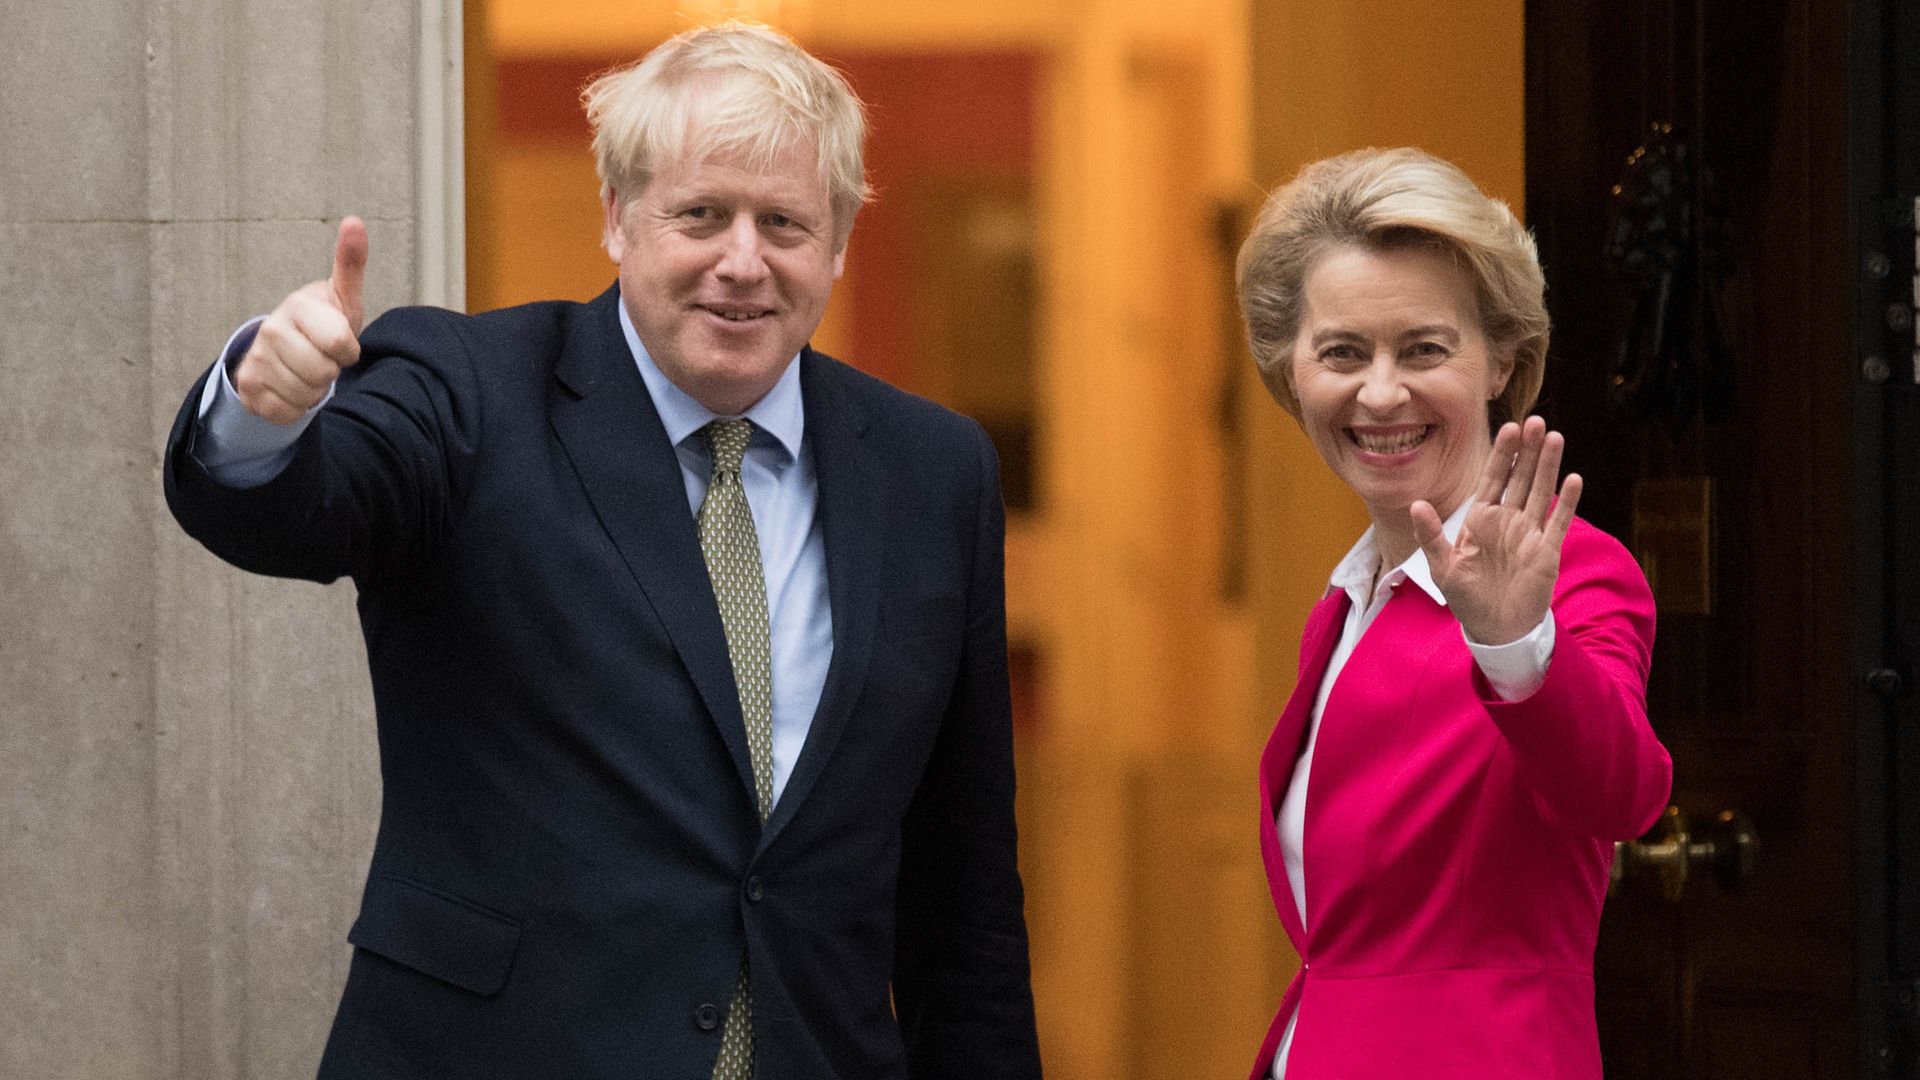 UK prime minister Boris Johnson and Ursula von der Leyen from the European Commission - Credit: PA